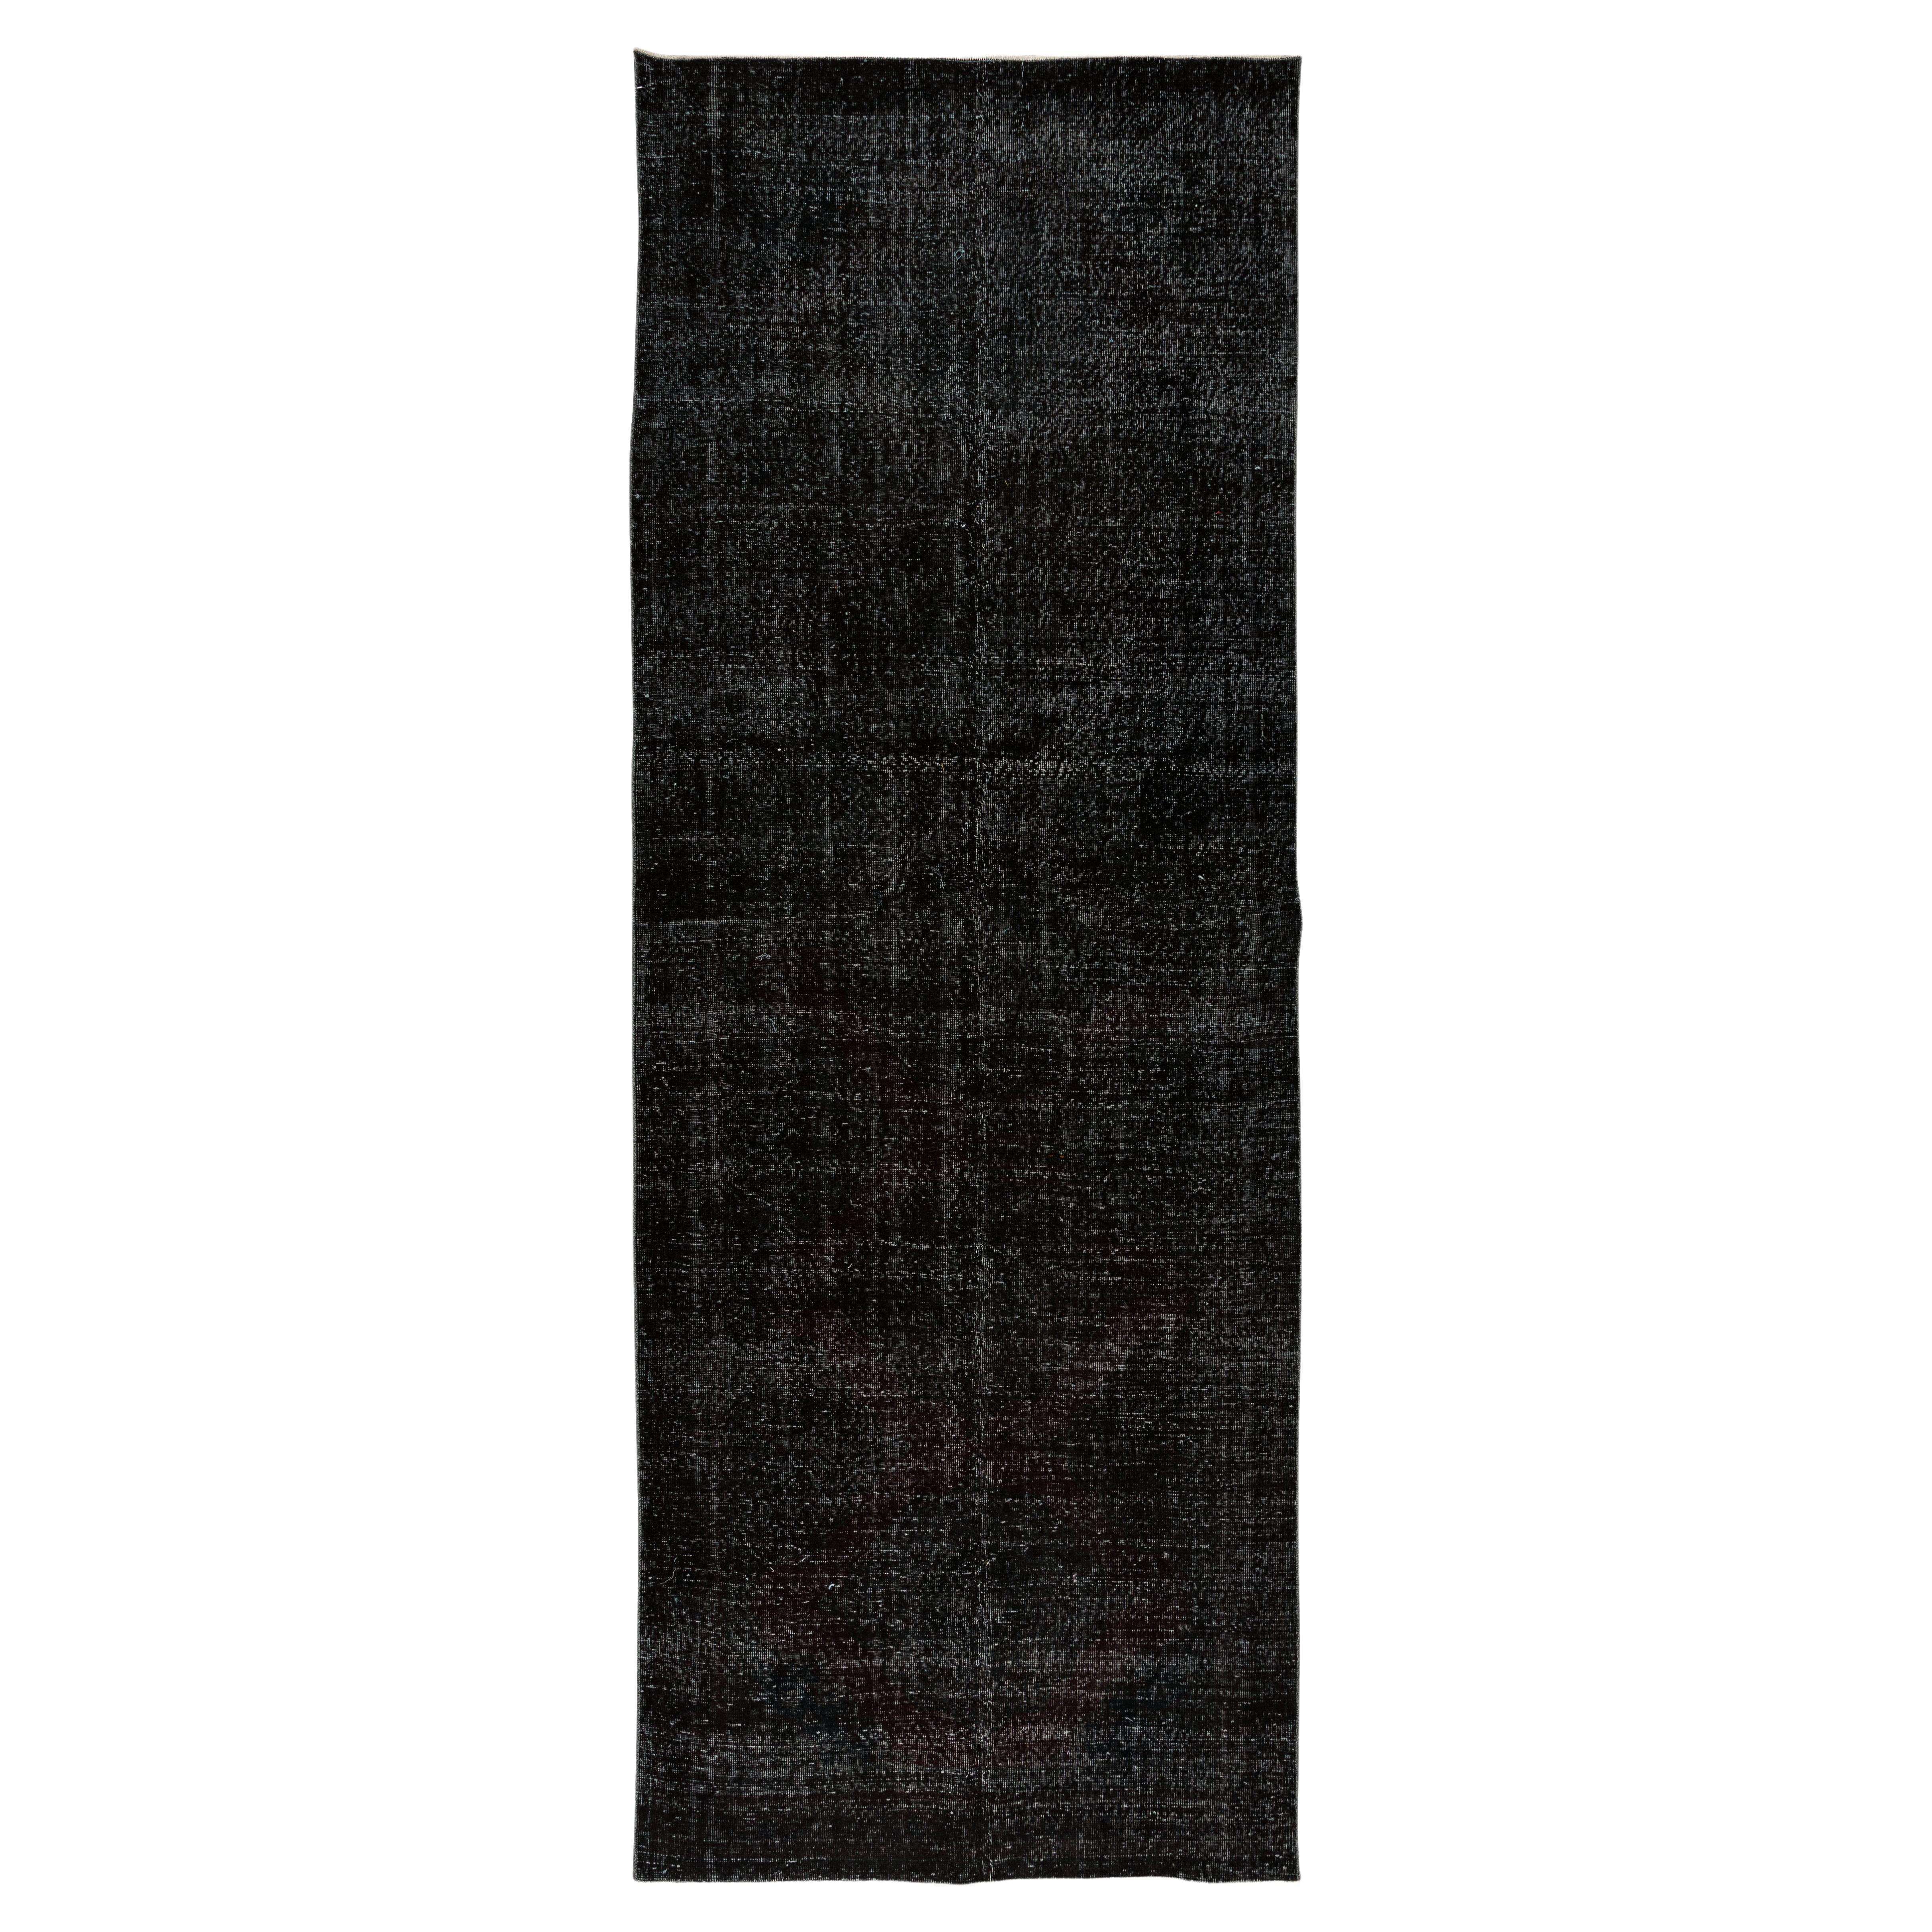 4.6x12.4 Ft Hand-Made Turkish Plain Wool Runner Rug, Solid Black Corridor Carpet